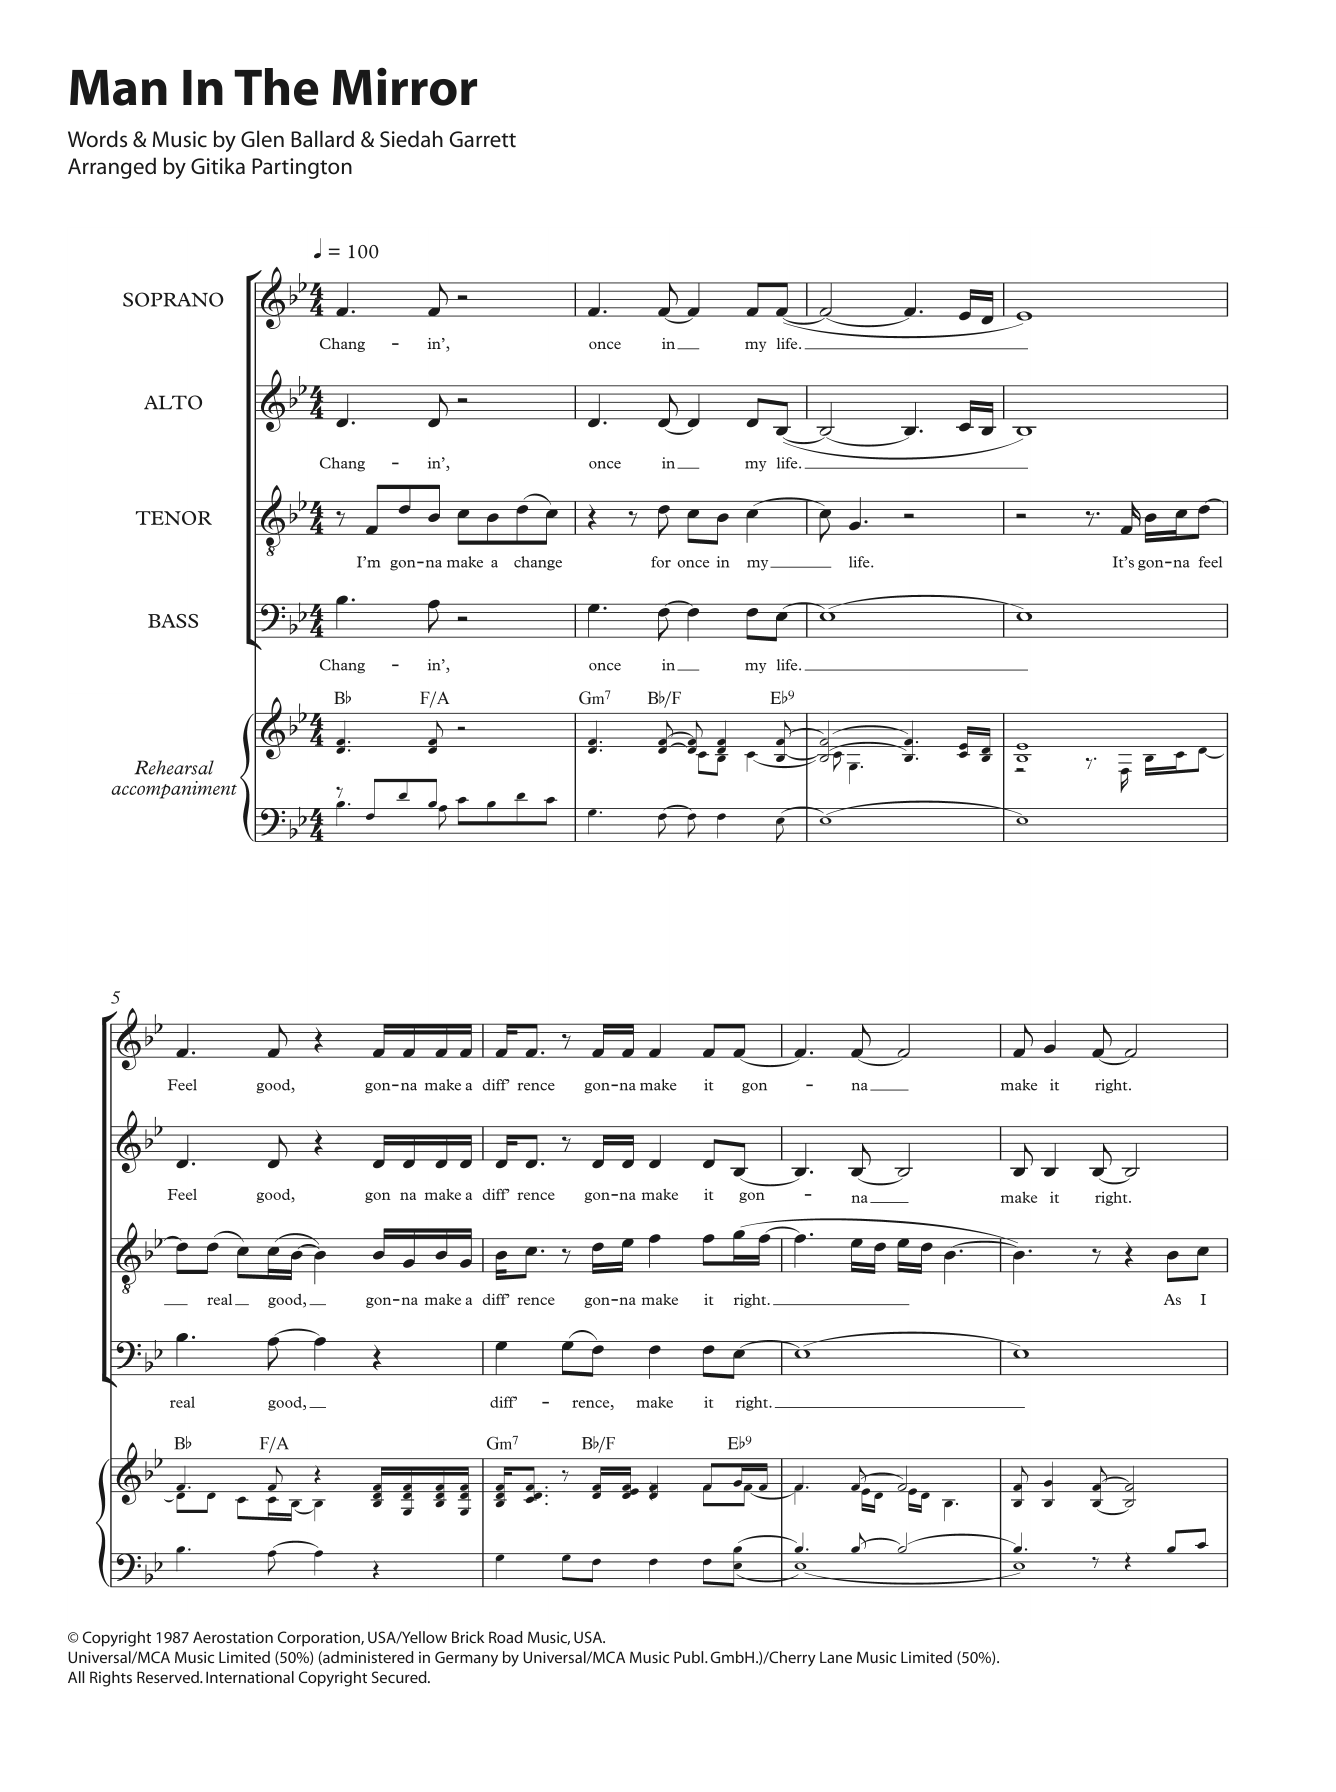 Michael Jackson Man In The Mirror (arr. Gitika Partington) Sheet Music Notes & Chords for SATB - Download or Print PDF